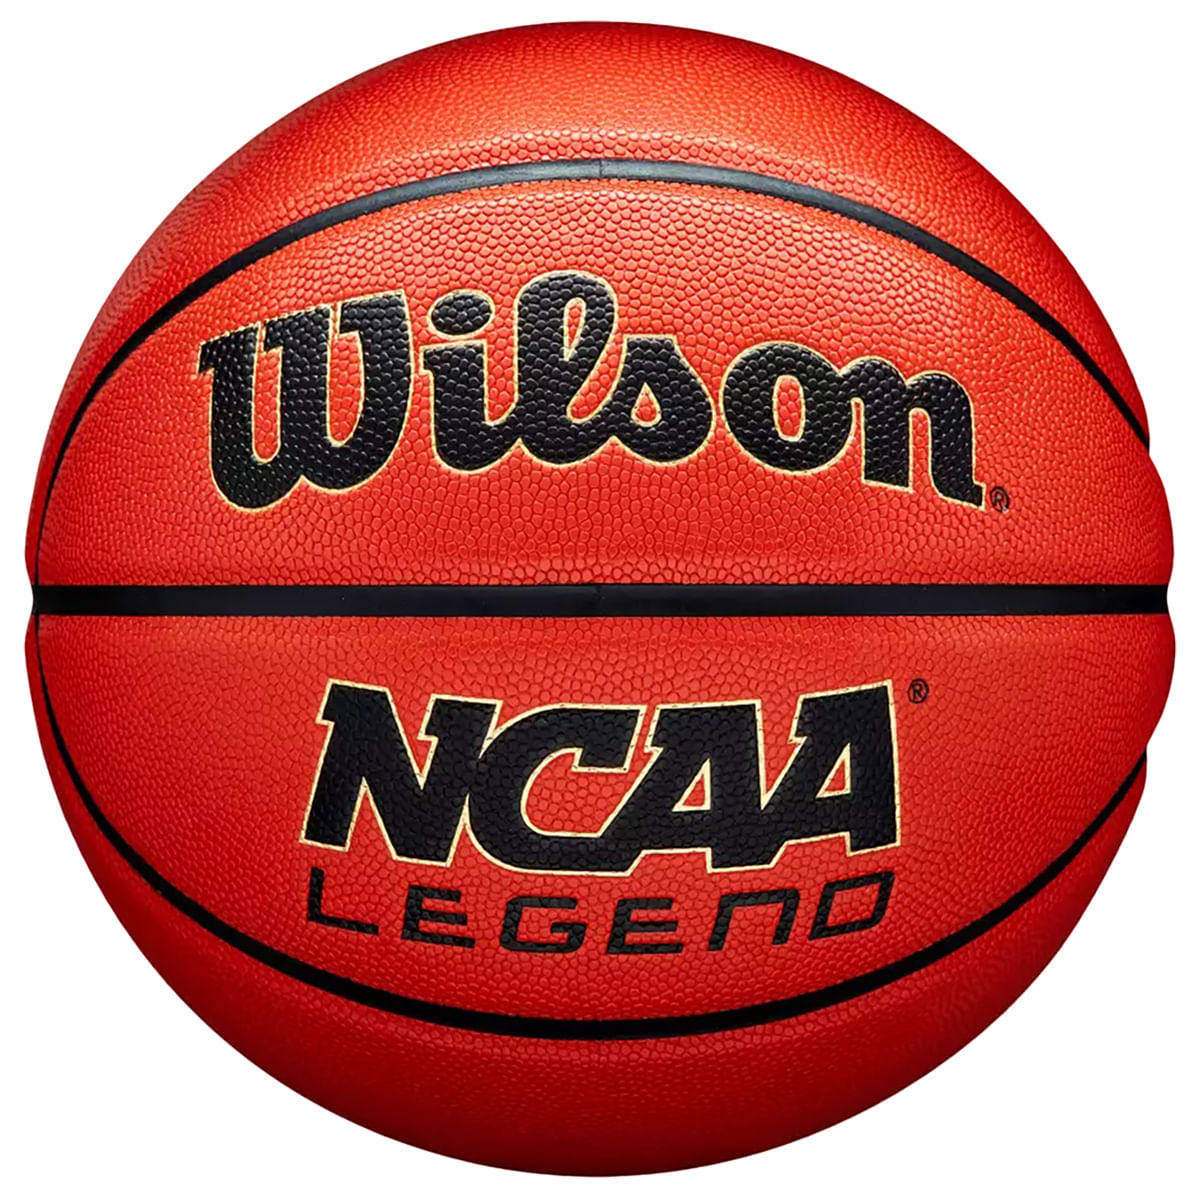 Wilson Vienna Basketball Jersey – American Rag Cie